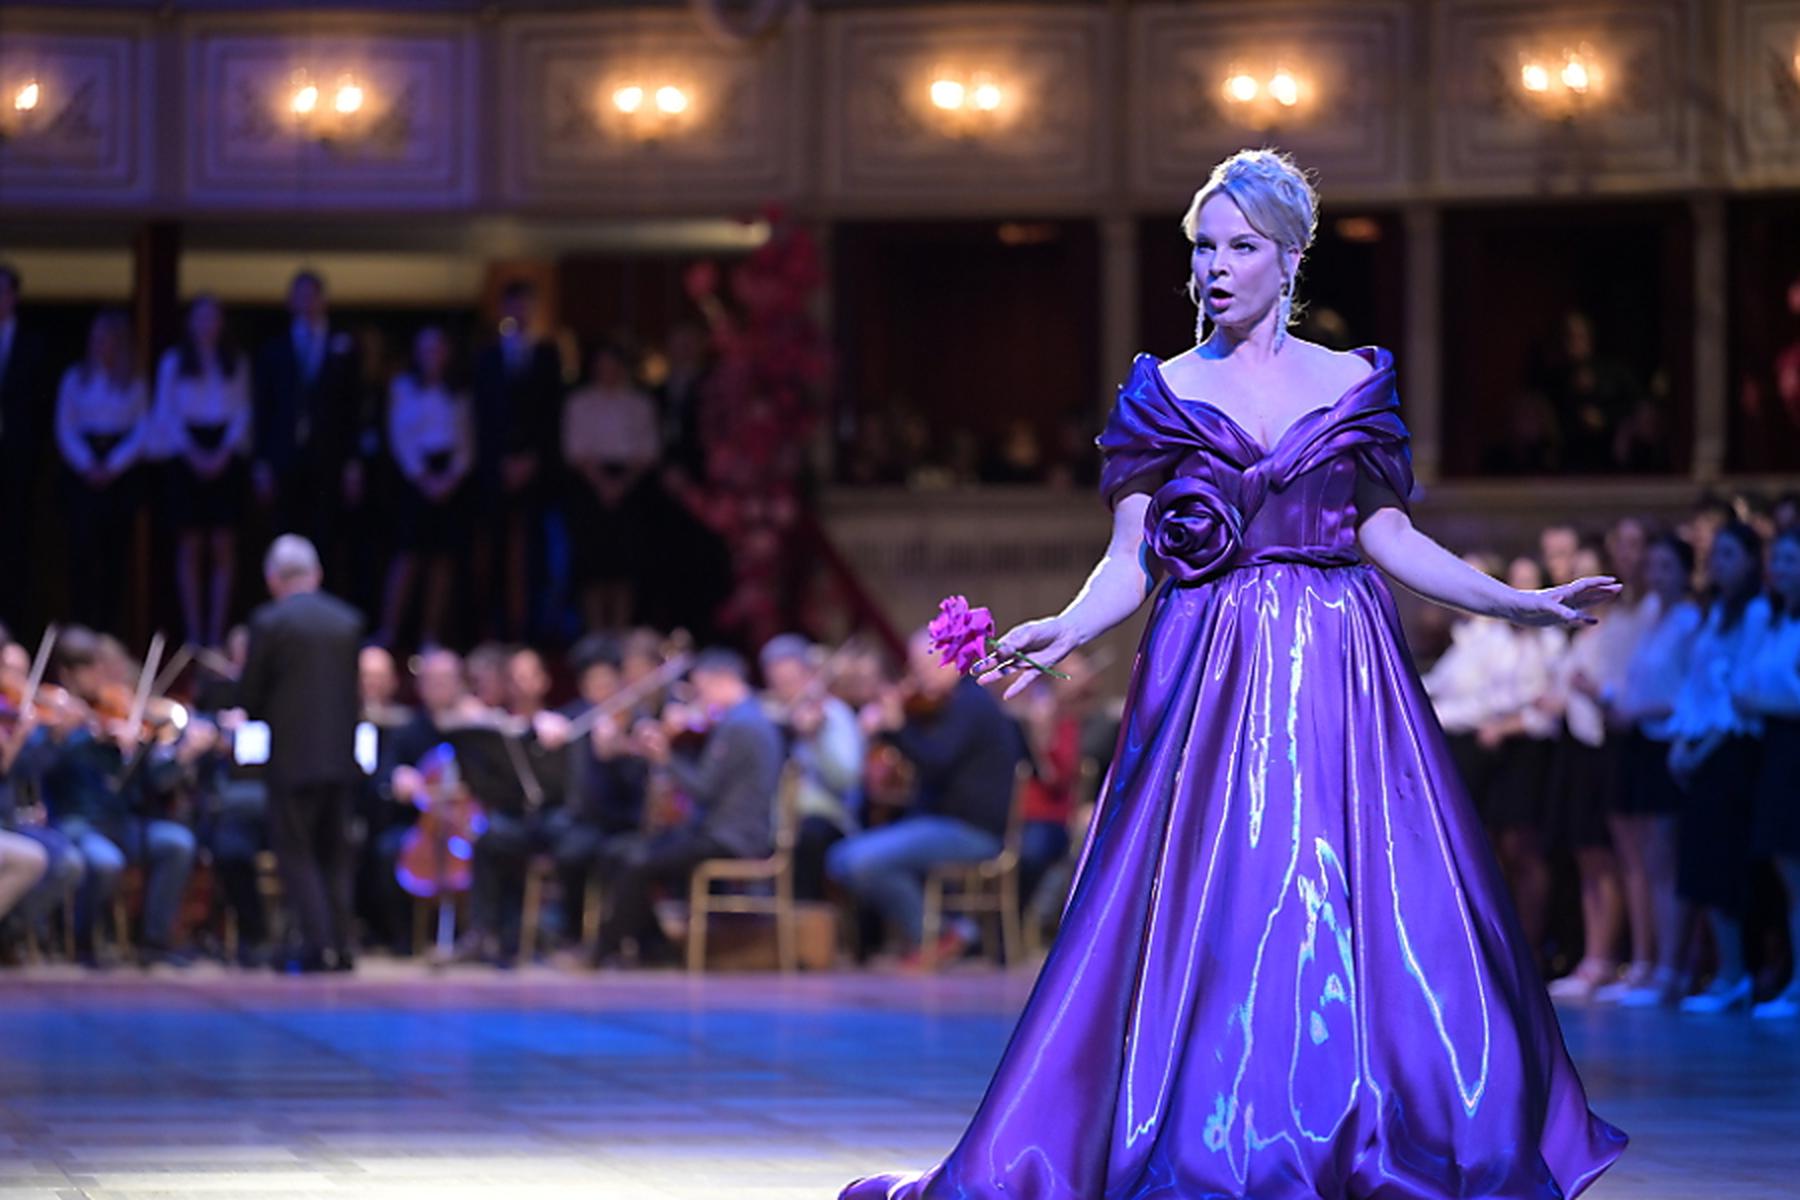 Wien | Opernstars Garanca und Beczala eröffnen Wiener Opernball